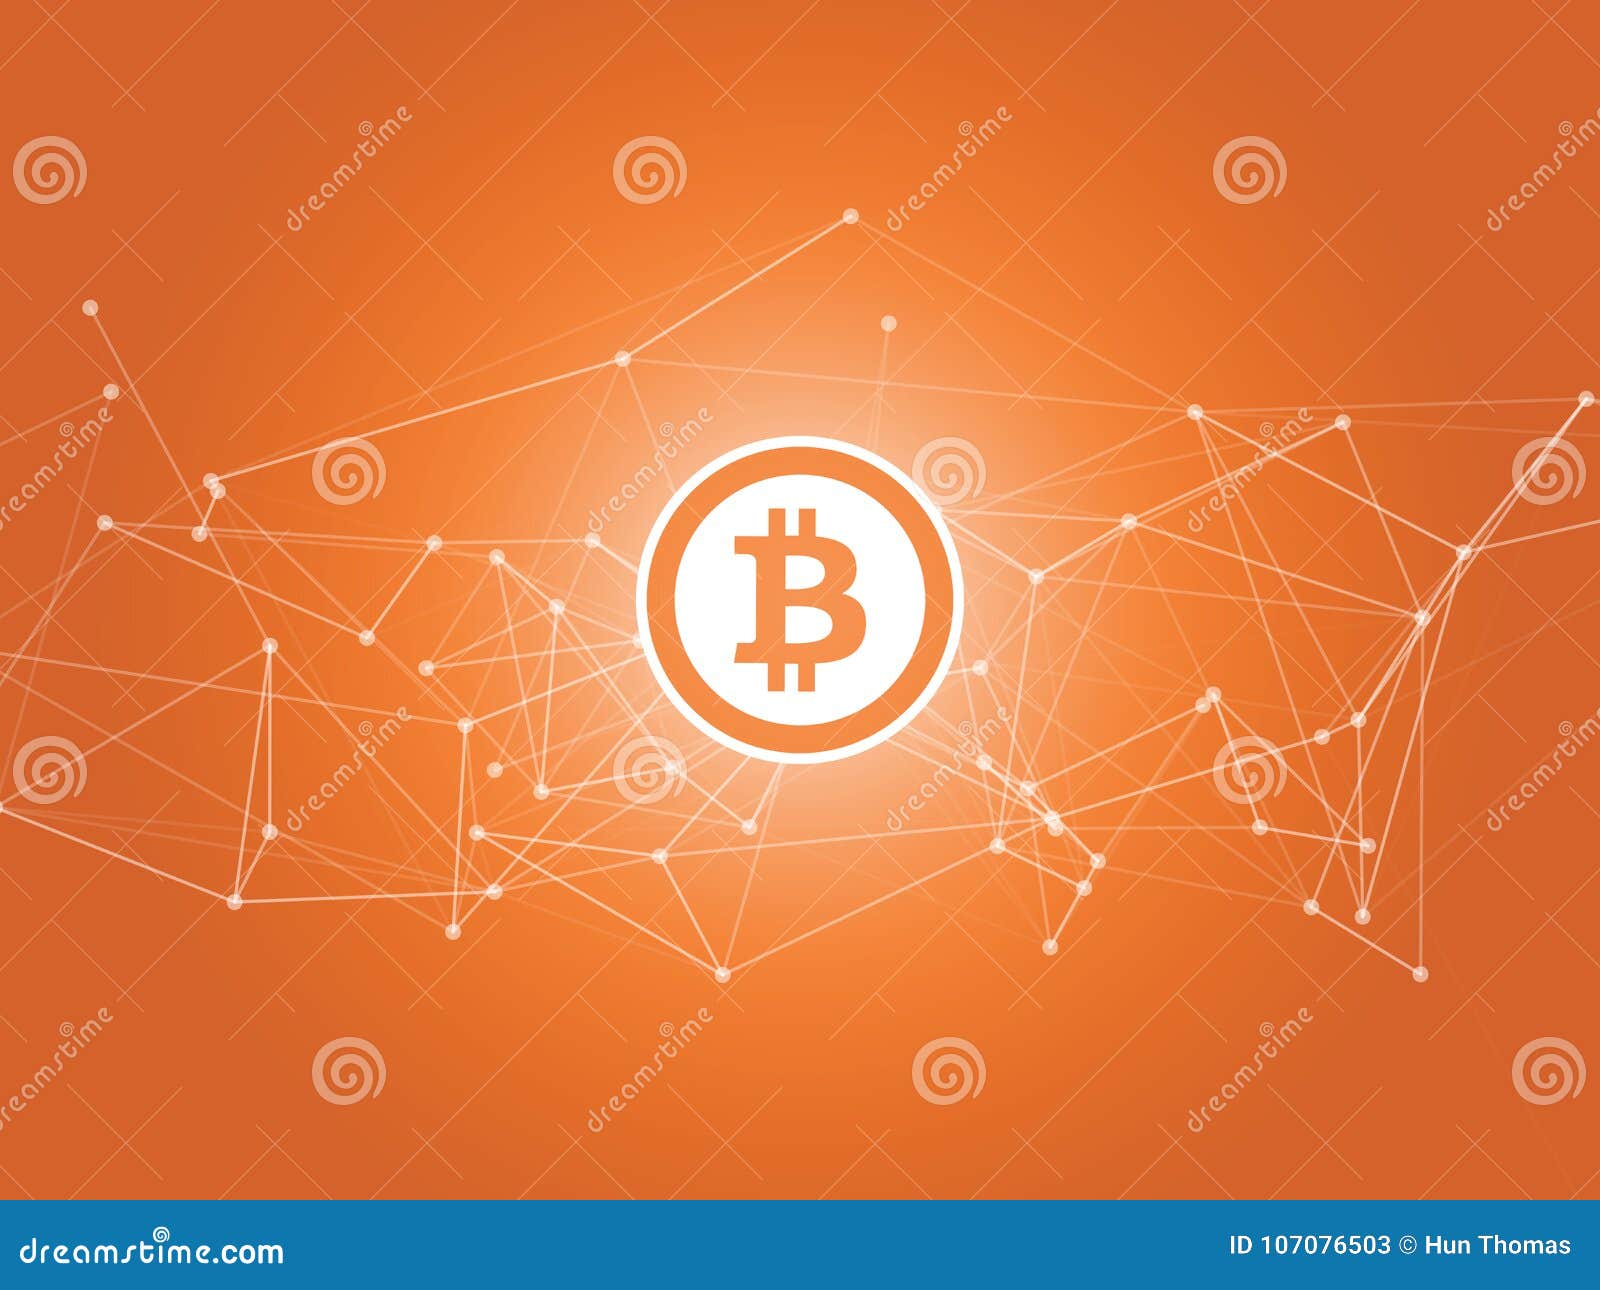 Orange Abstract Network Mesh With Bitcoin Logo - Vector ...